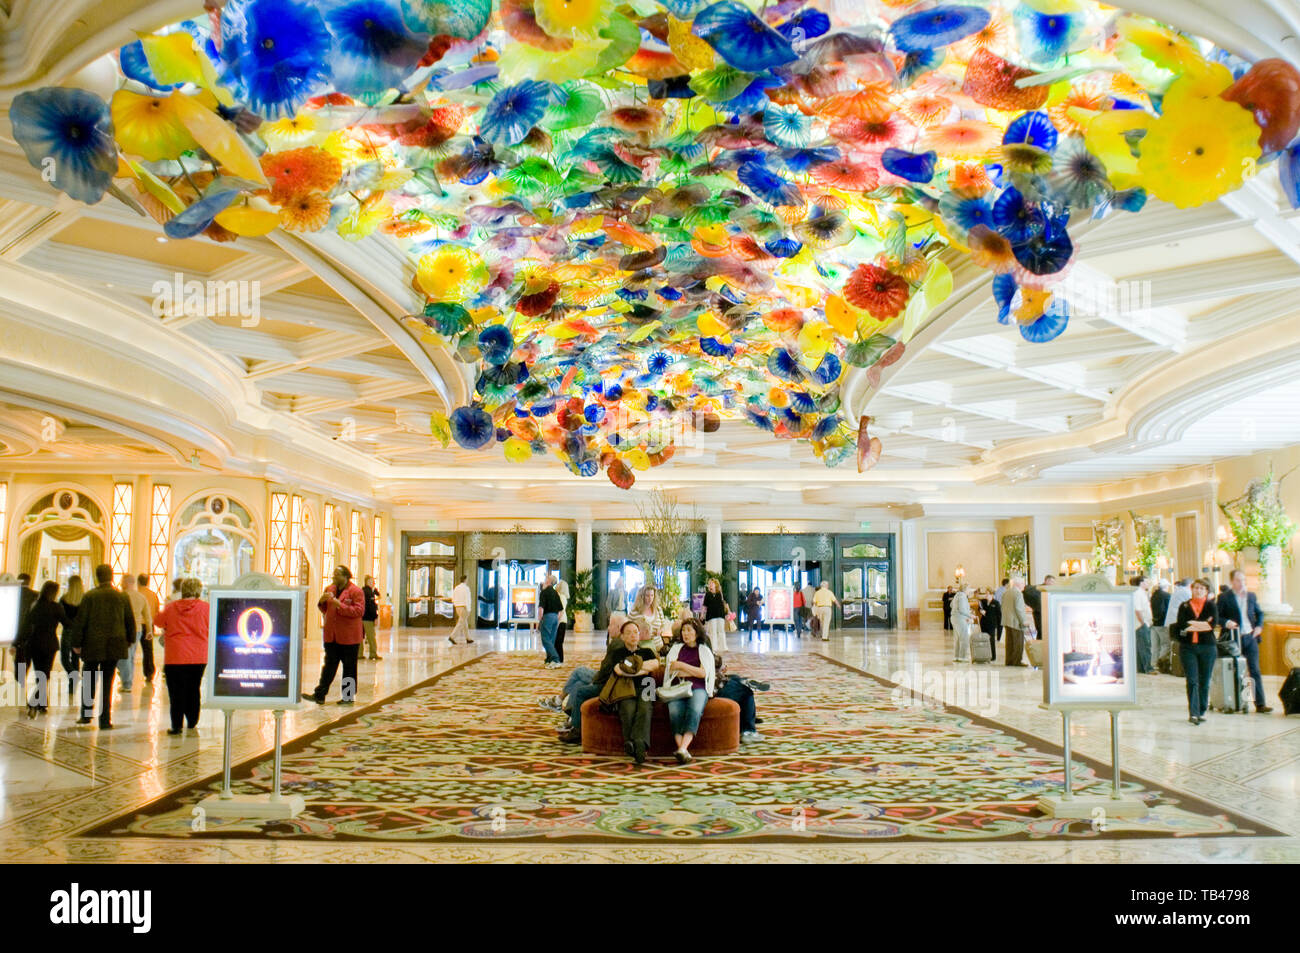 Bellagio Hotel Lobby. In Las Vegas, Nevada Stockfotografie - Alamy